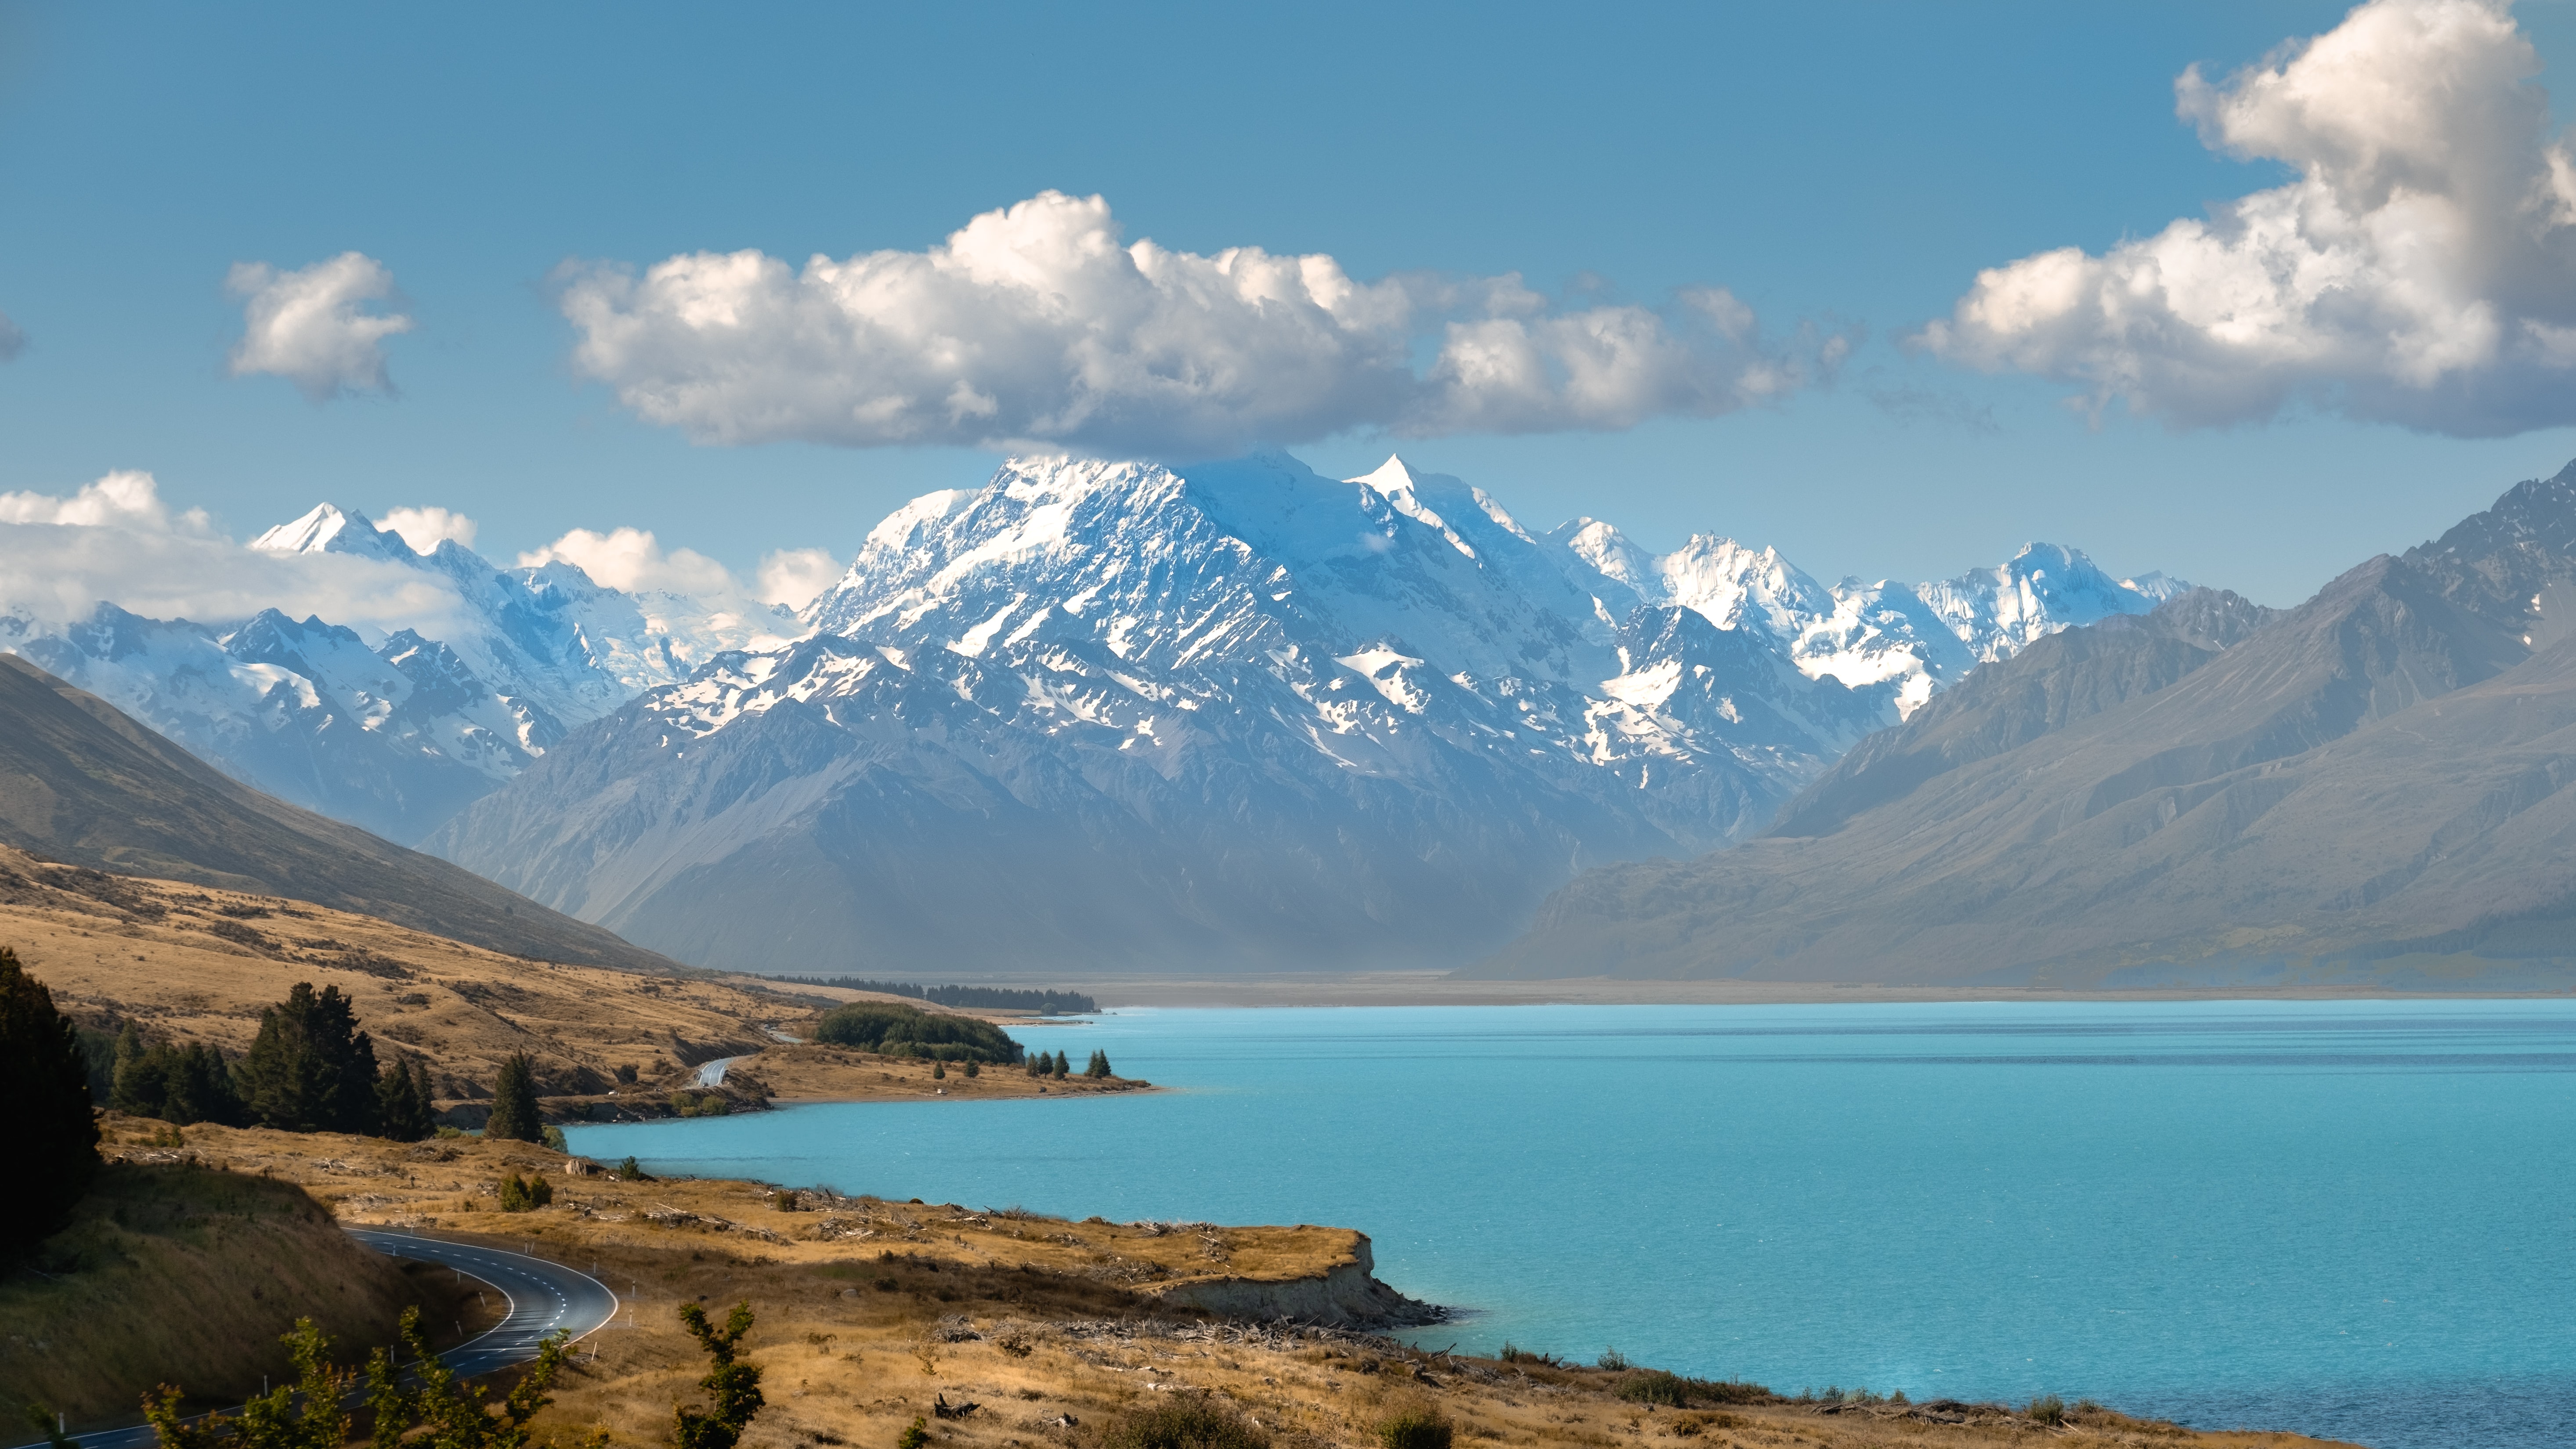 Mt Cook and Lake Pukaki - Image courtesy James Pere and Unsplash